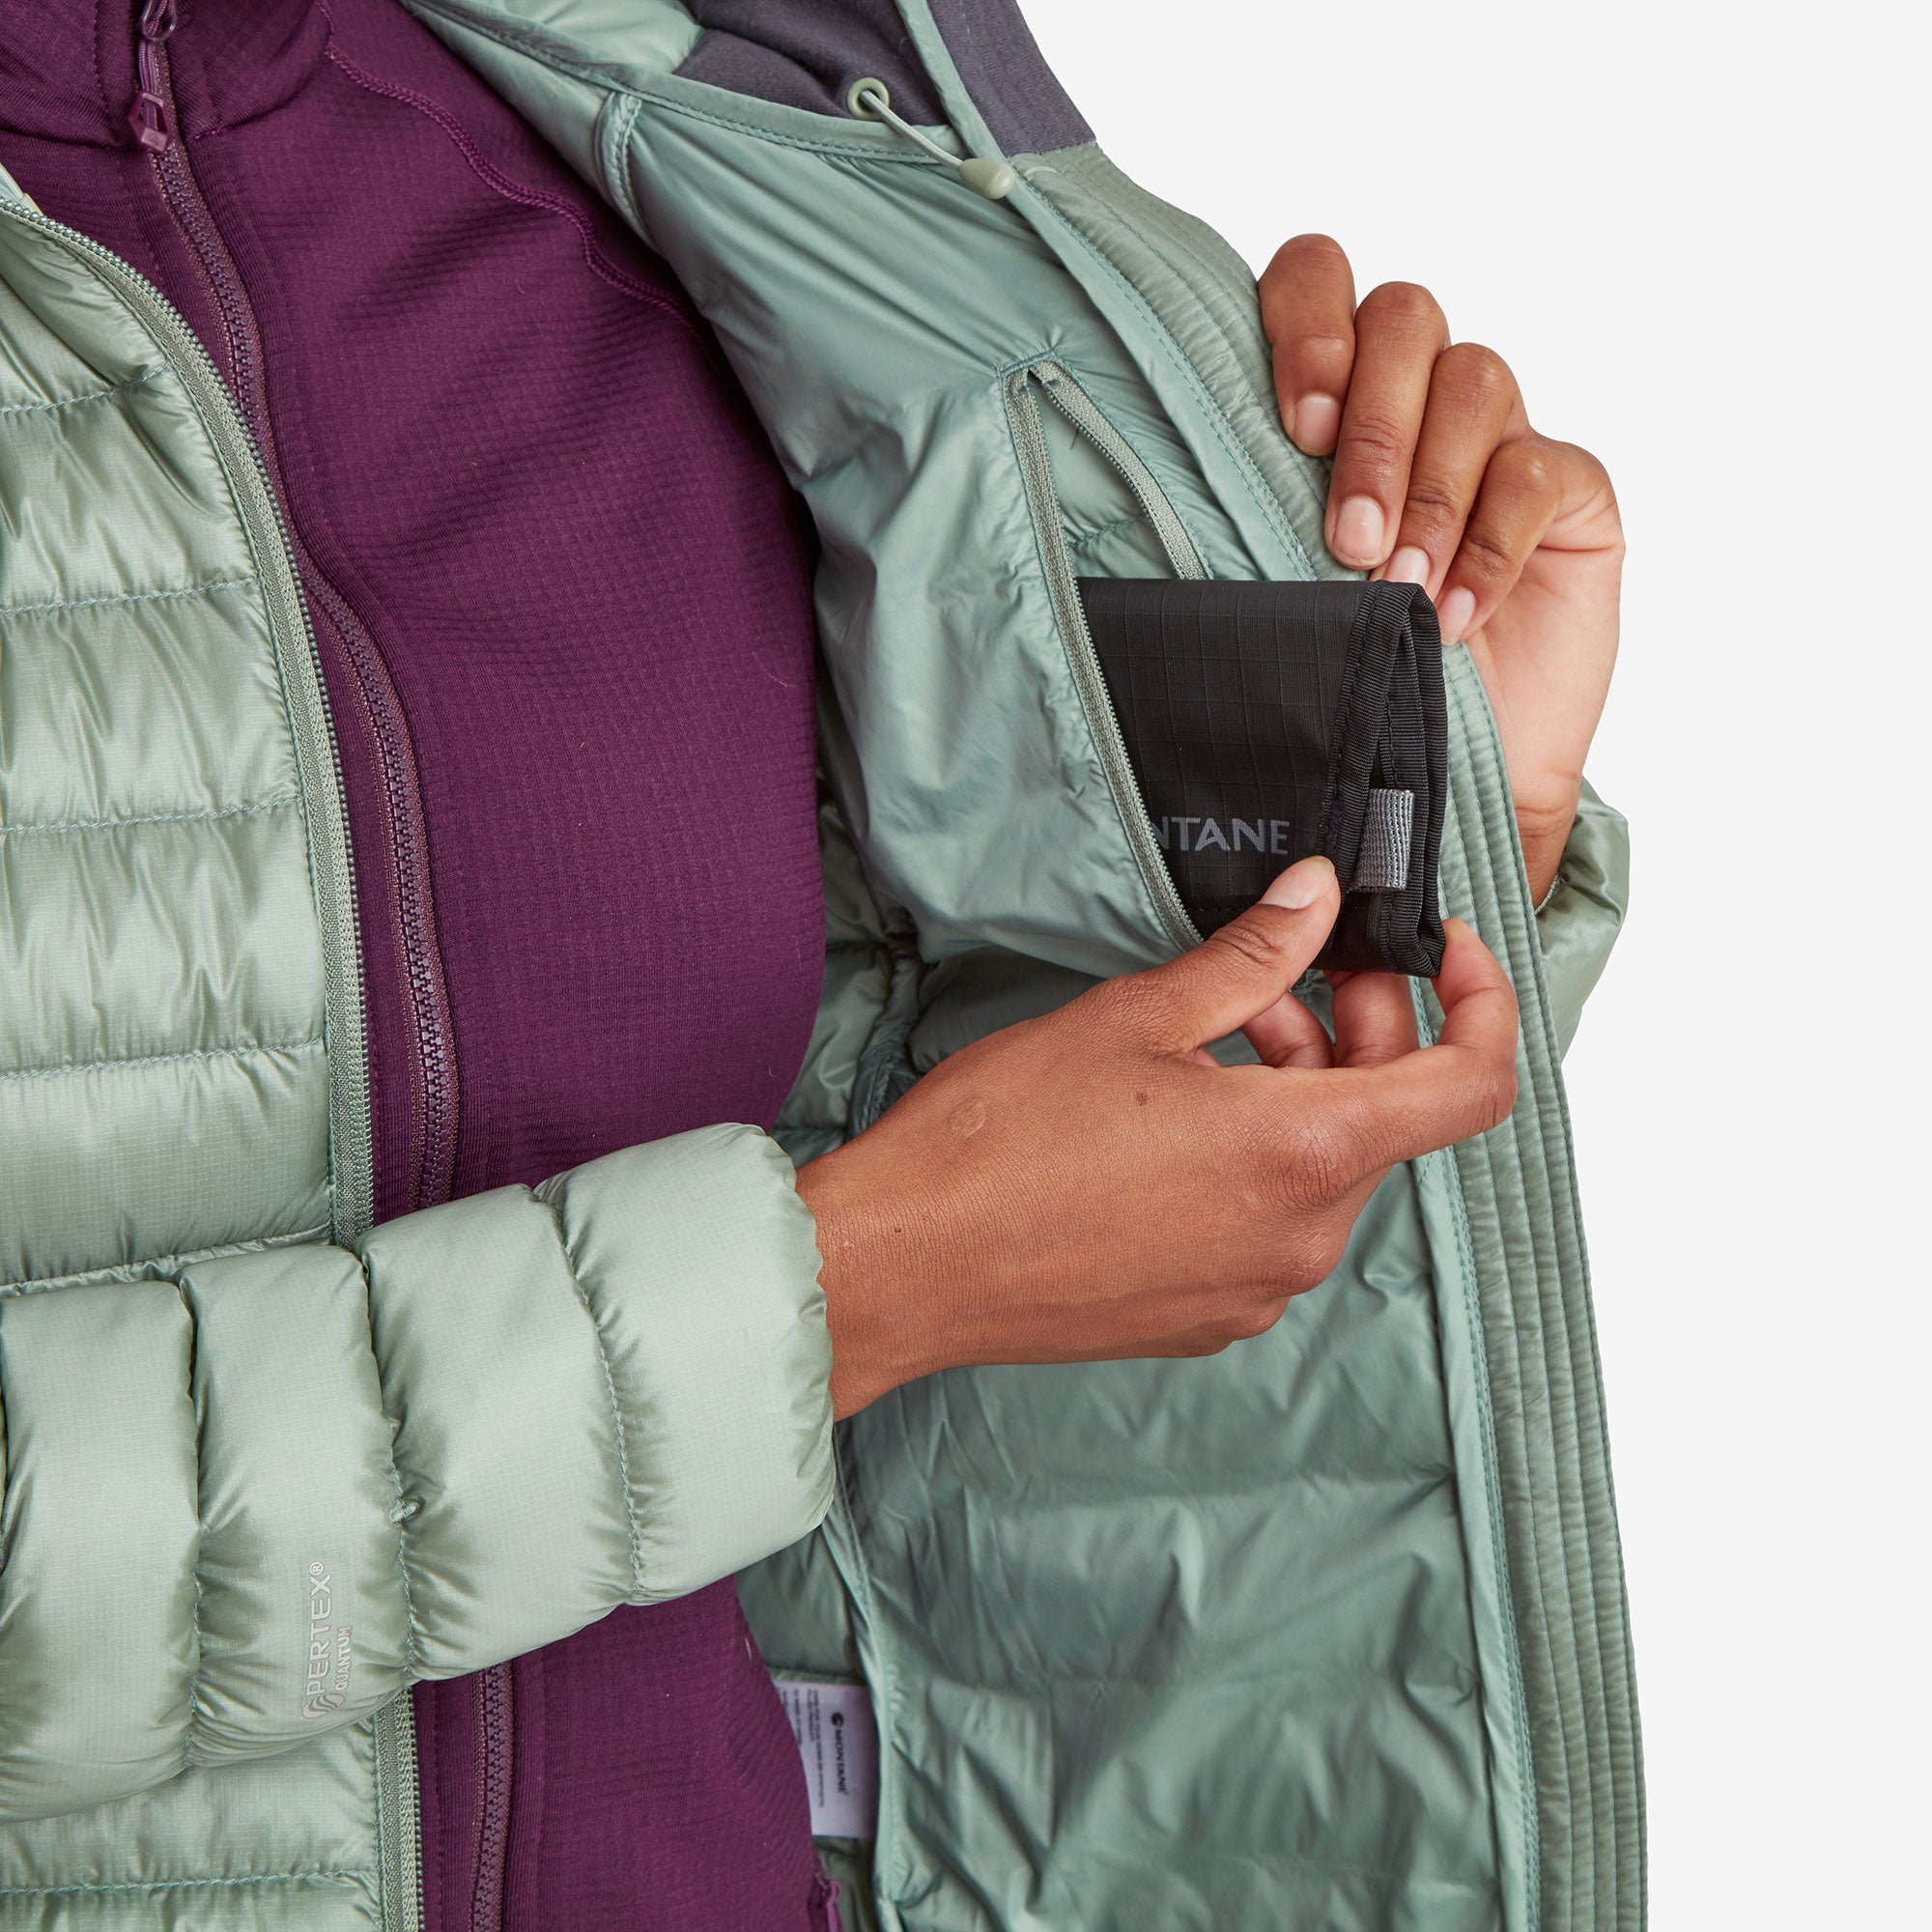 Montane Women's Anti-Freeze Hooded Down Jacket